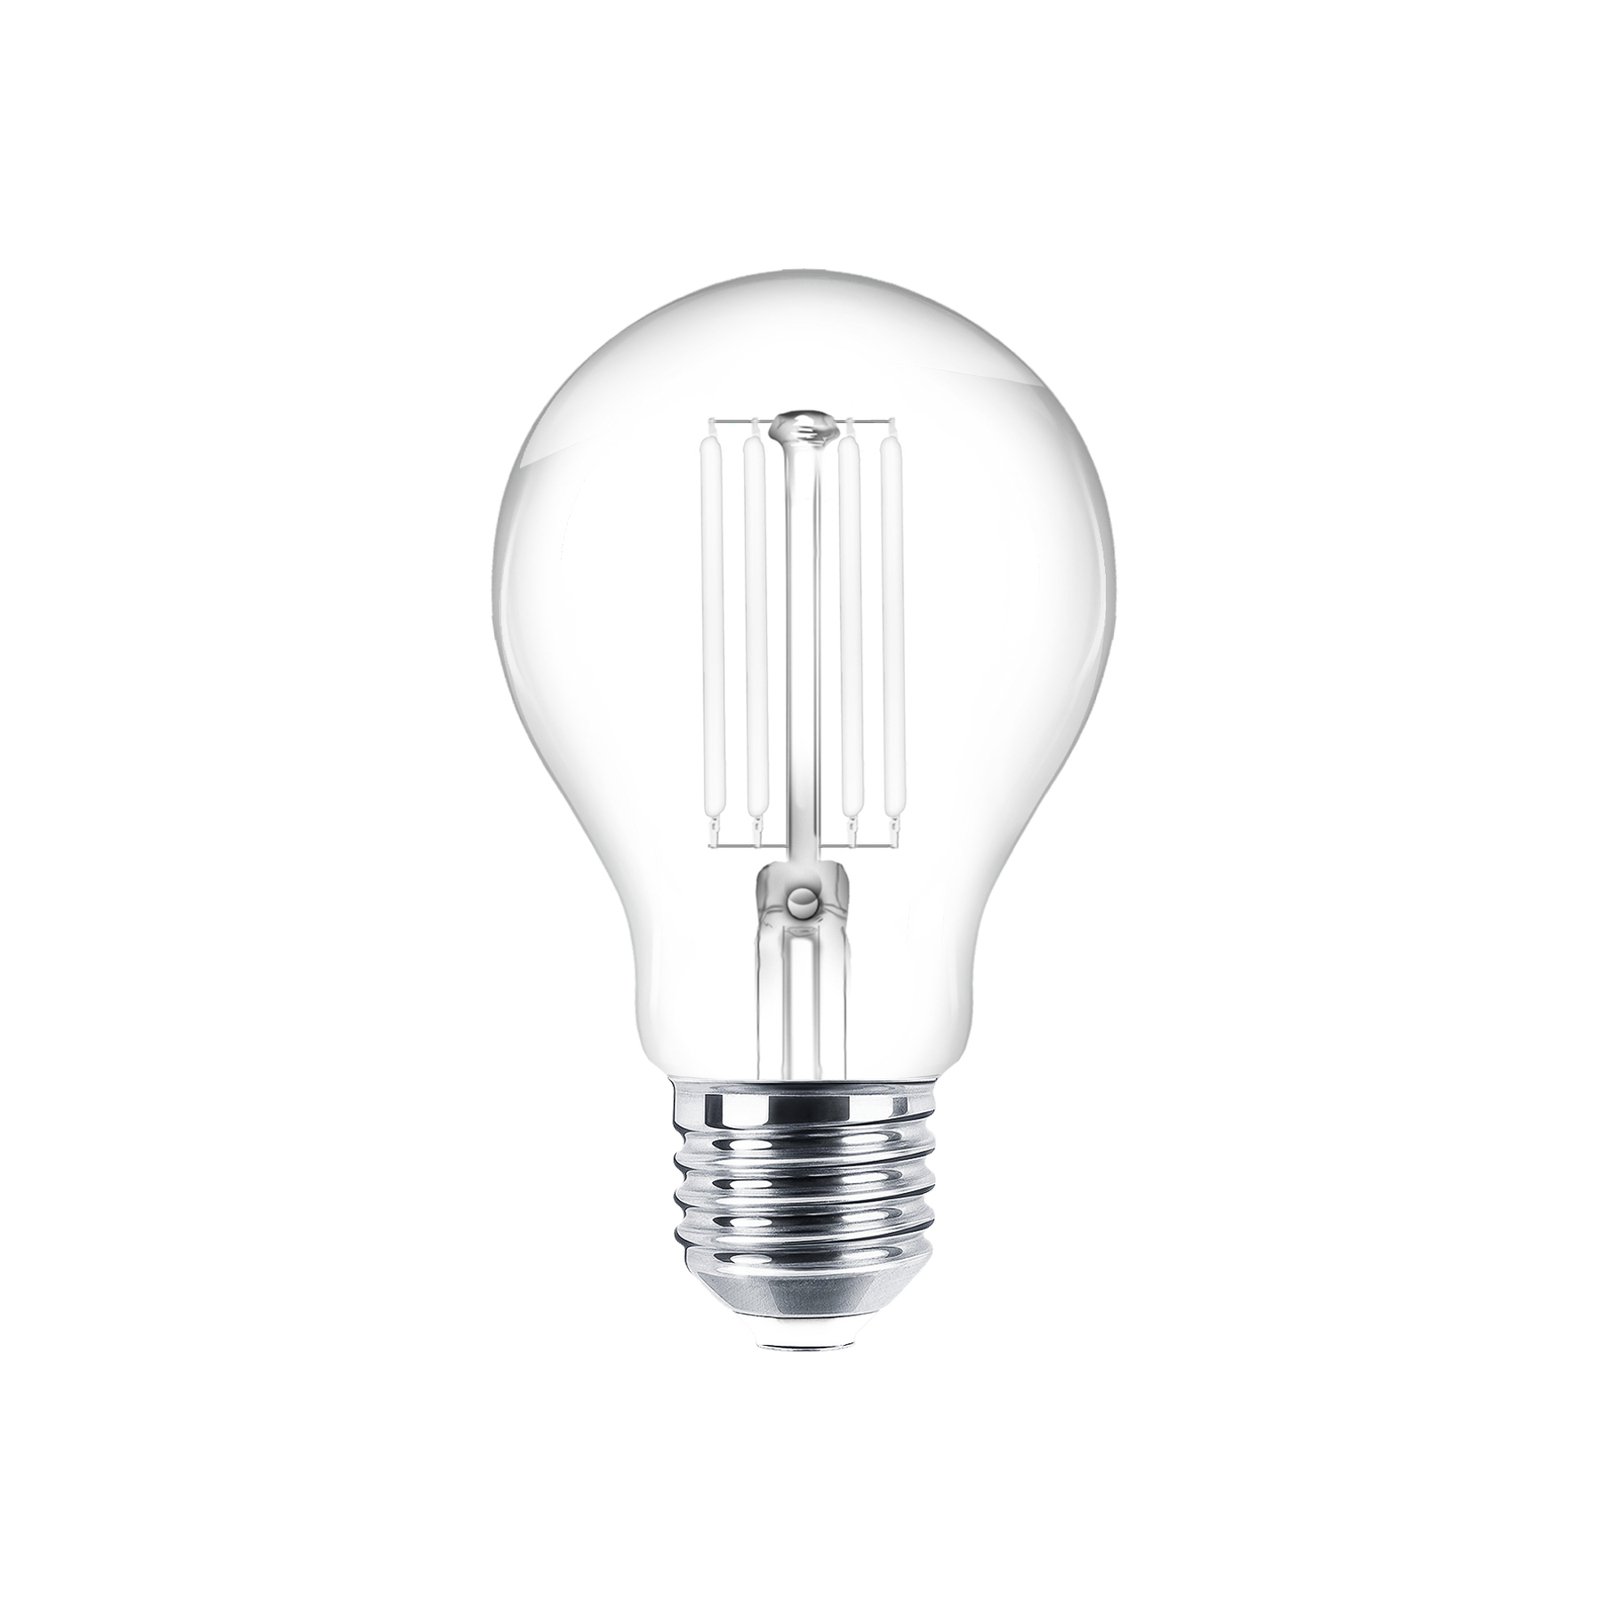 LED bulb Filament E27 set of 3 4W 470 lmclear 2,700K